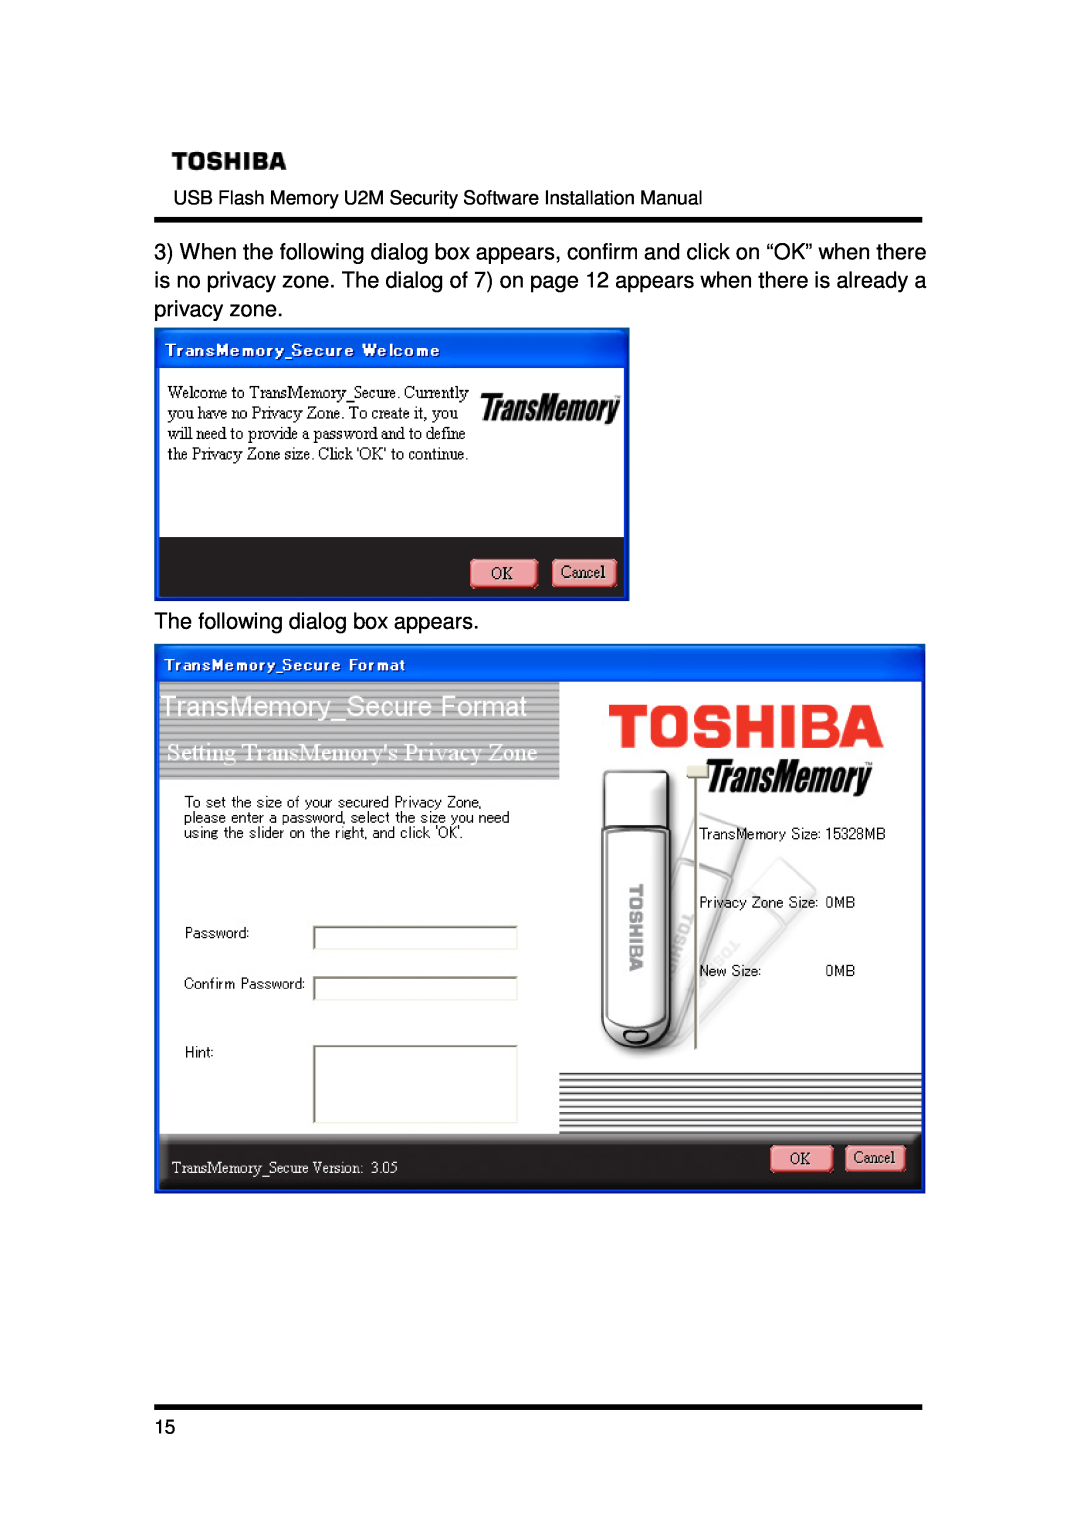 Toshiba U2M-016GT, U2M-004GT The following dialog box appears, USB Flash Memory U2M Security Software Installation Manual 